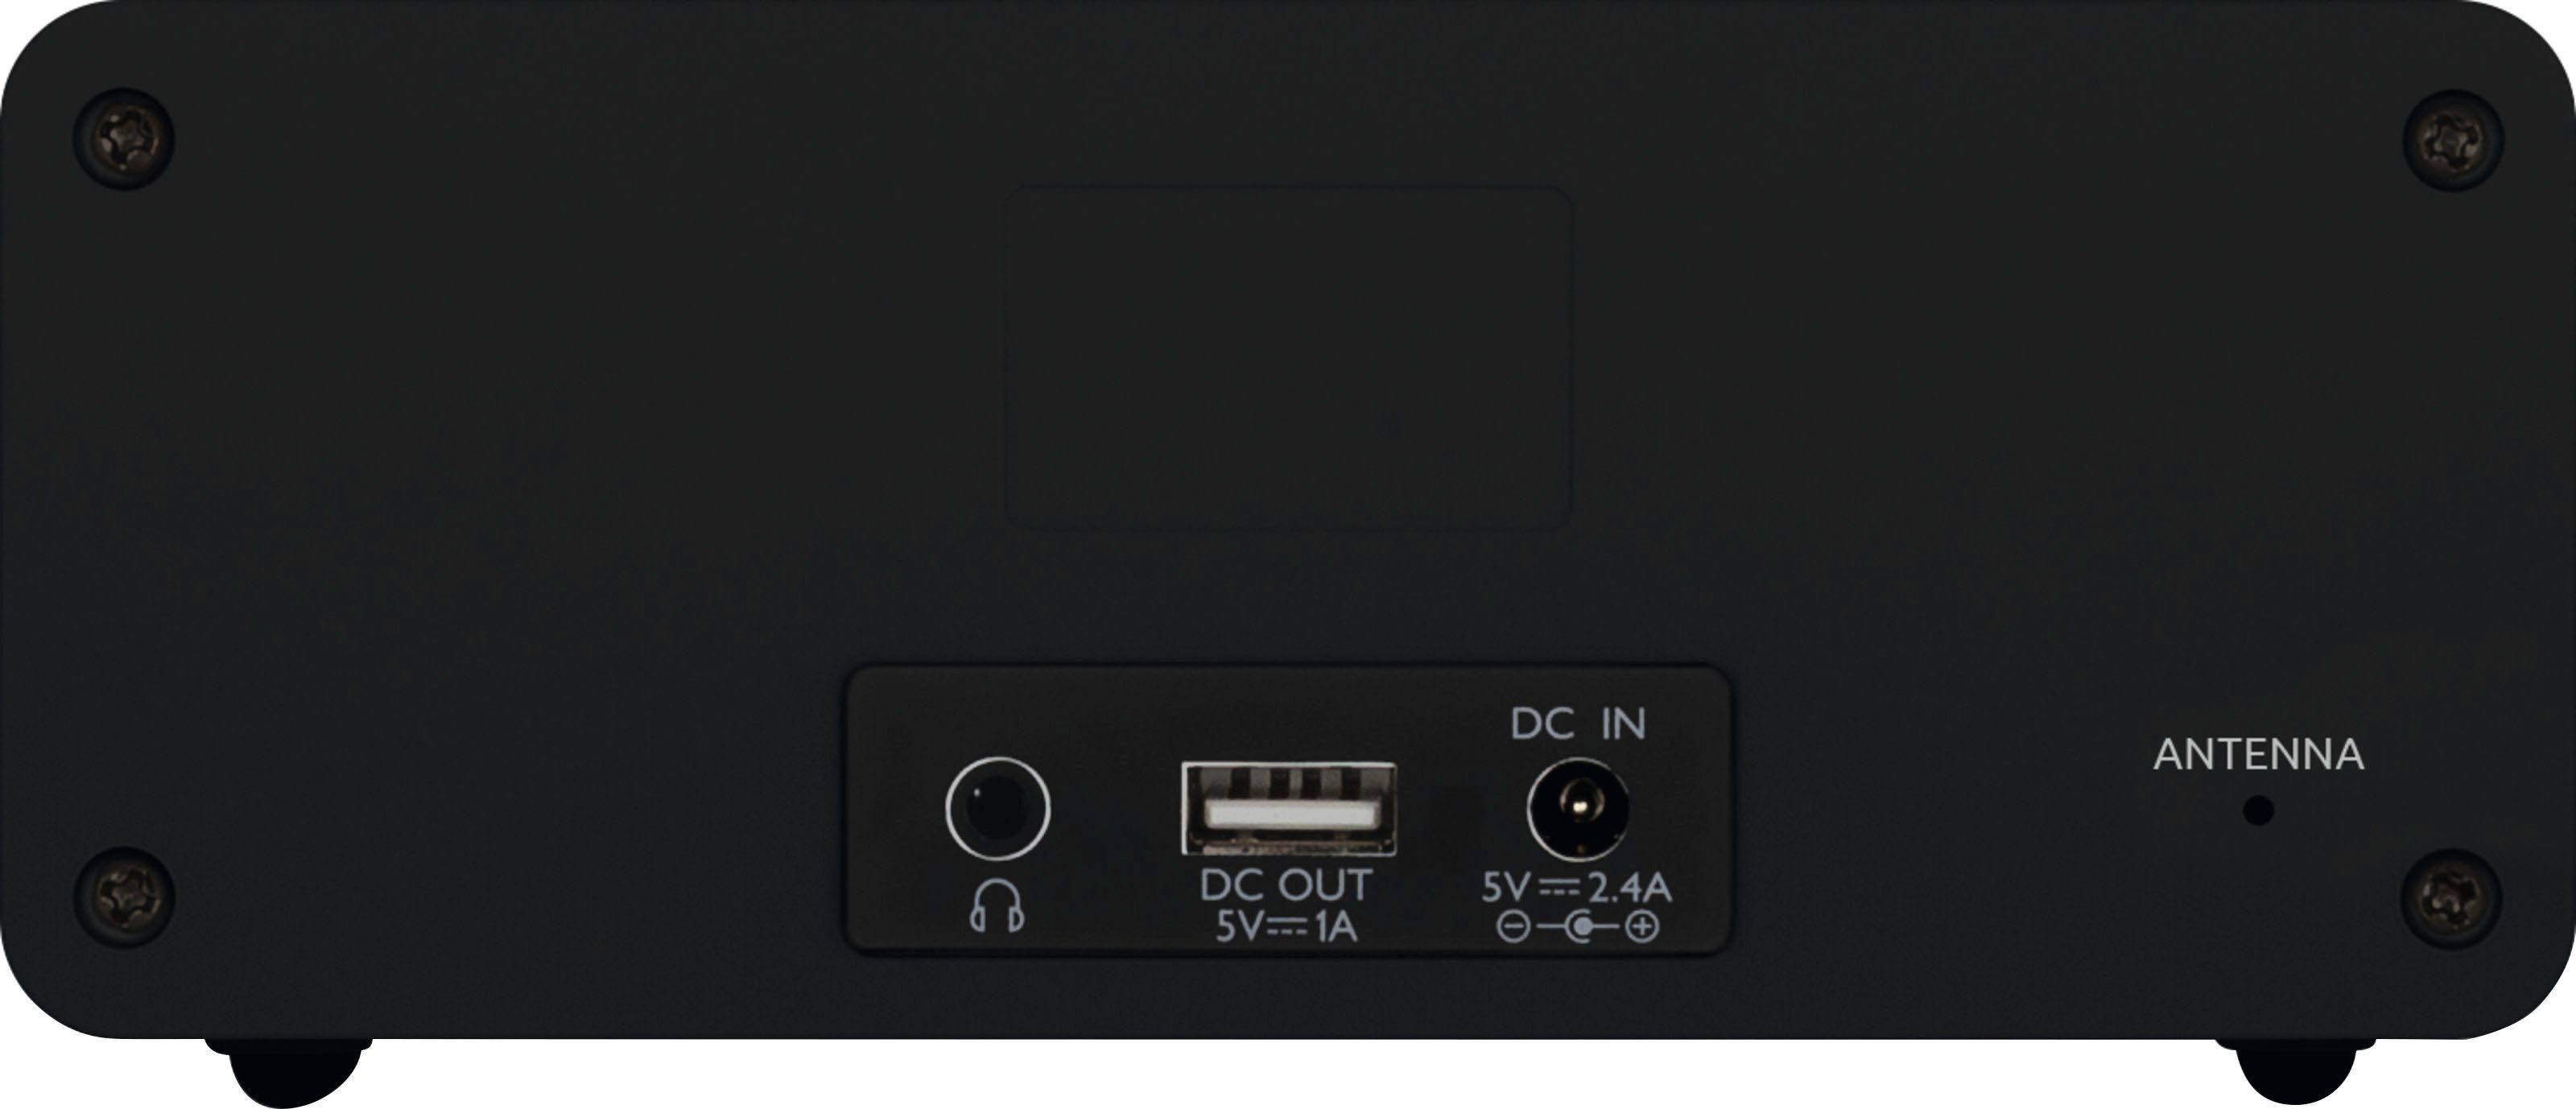 TechniSat Radiowecker DIGITRADIO 52 Snooze-Funktion, Stereo dimmbares Sleeptimer mit Display, schwarz - DAB+, Uhrenradio